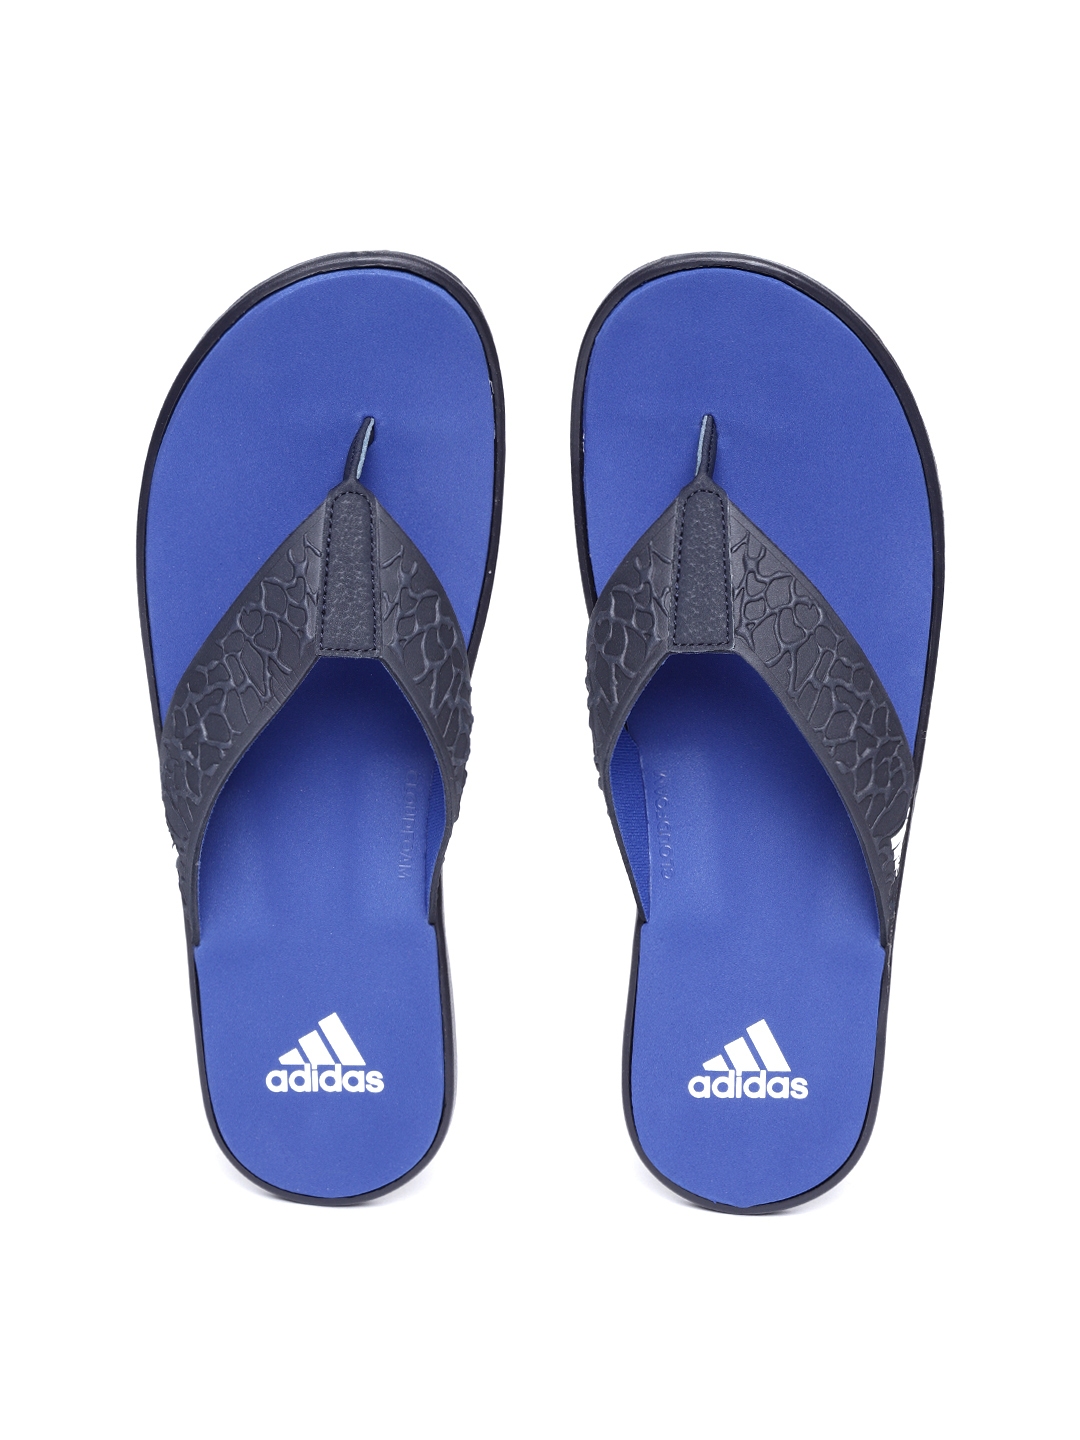 adidas beachcloud slippers